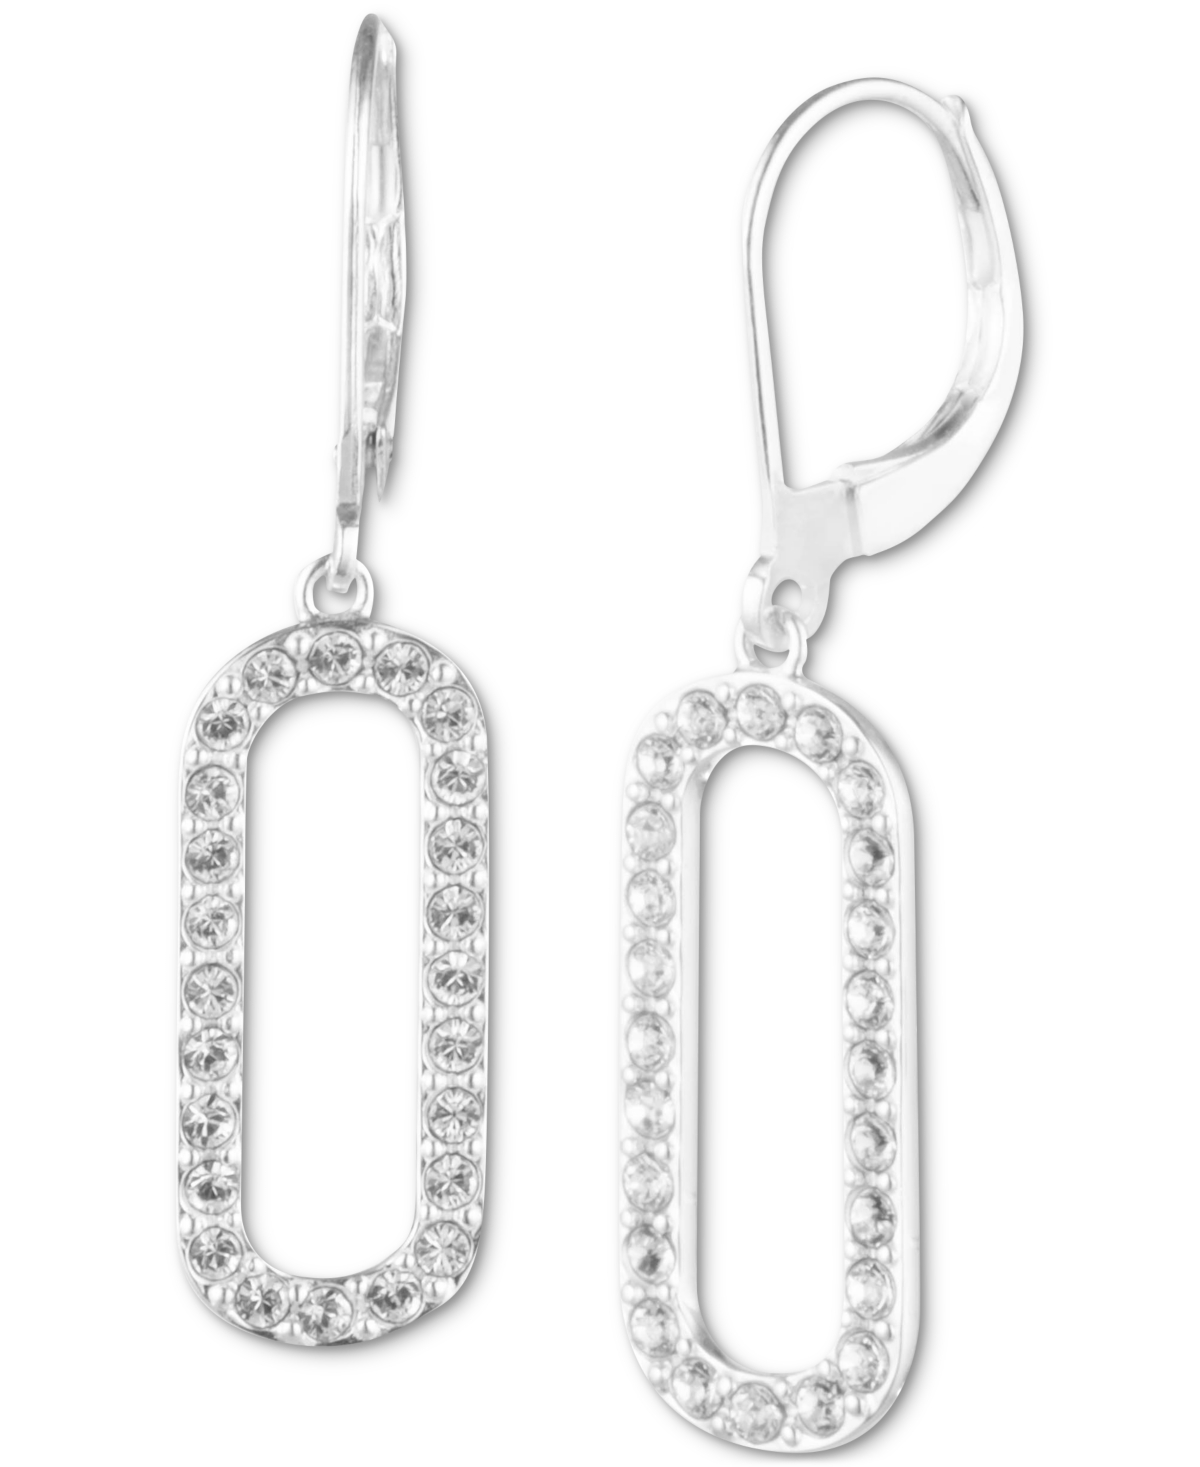 Lauren Ralph Lauren Crystal Pave Link Leverback Drop Earrings in Sterling Silver - Sterling Silver